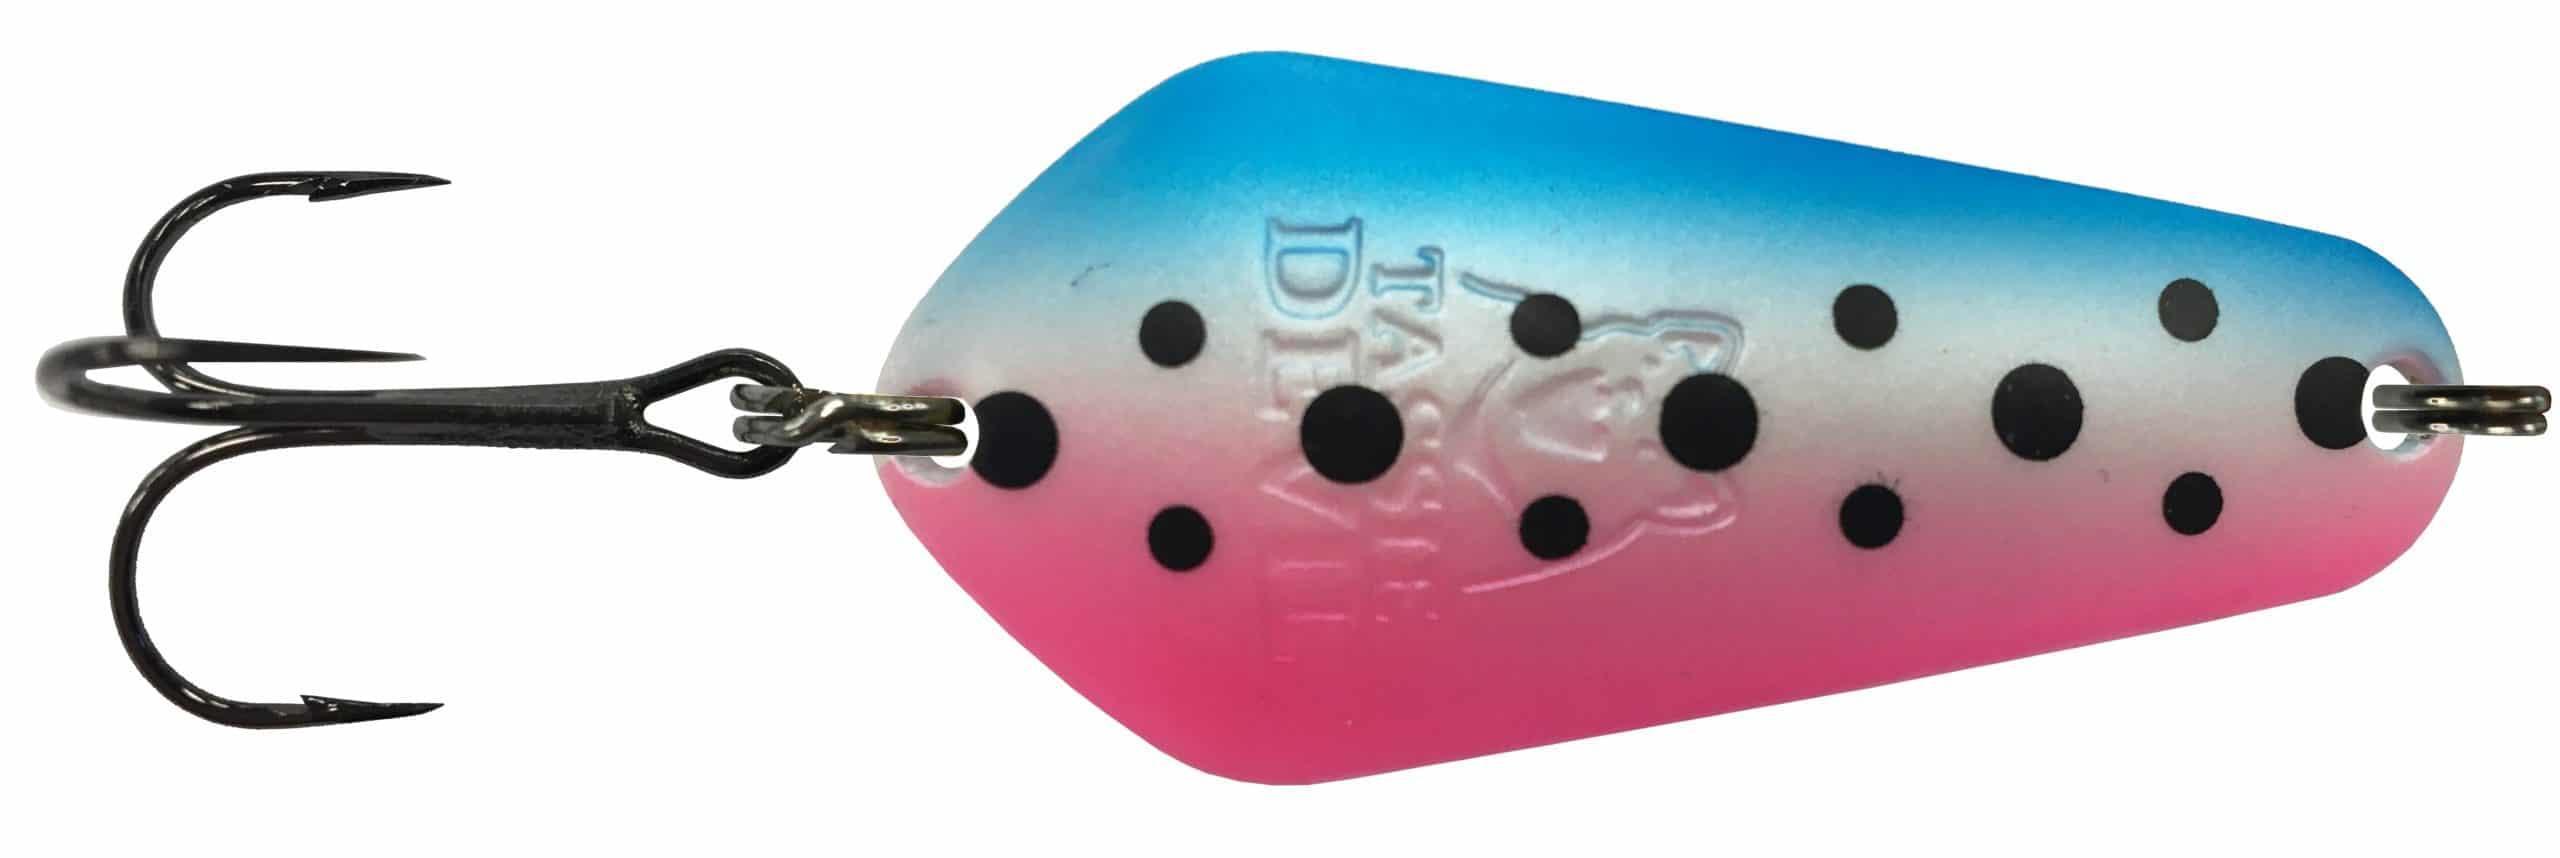 Tassie Devil Spoon 9.0gm - 9.0GM / RAINBOW TROUT UV - Mansfield Hunting & Fishing - Products to prepare for Corona Virus